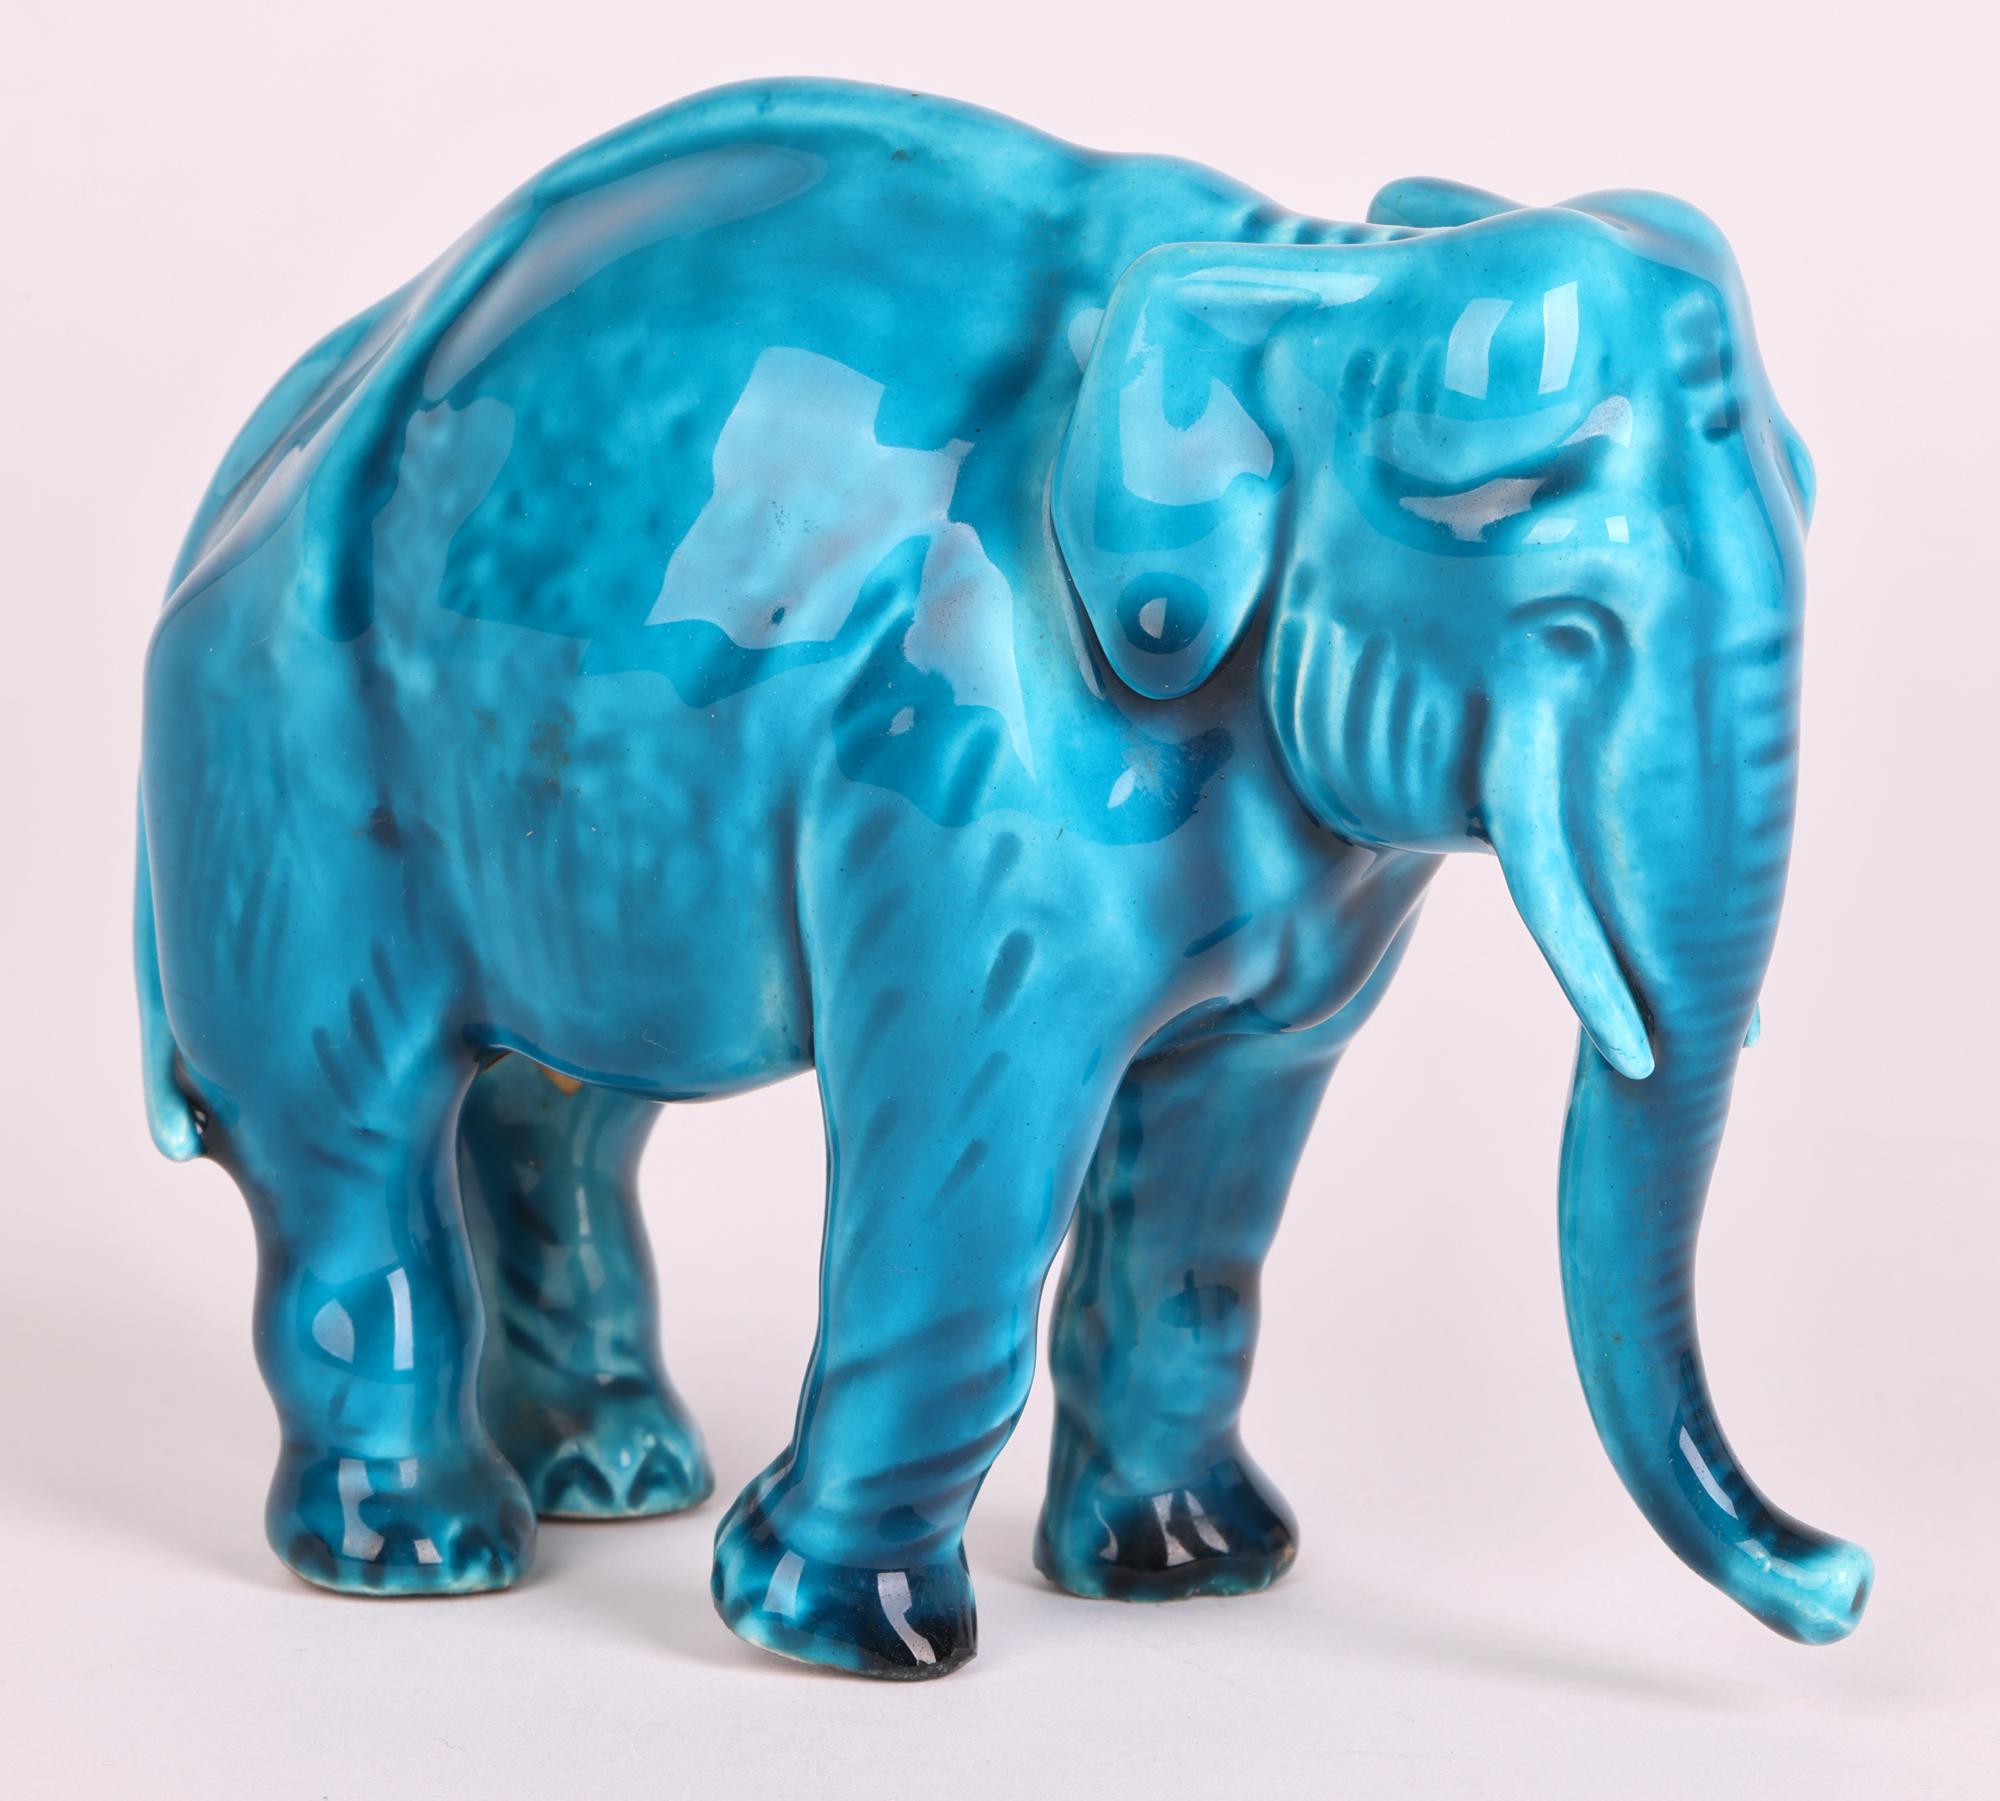 French Paul Milet Sevres Turquoise Glazed Ceramic Elephant Figure    For Sale